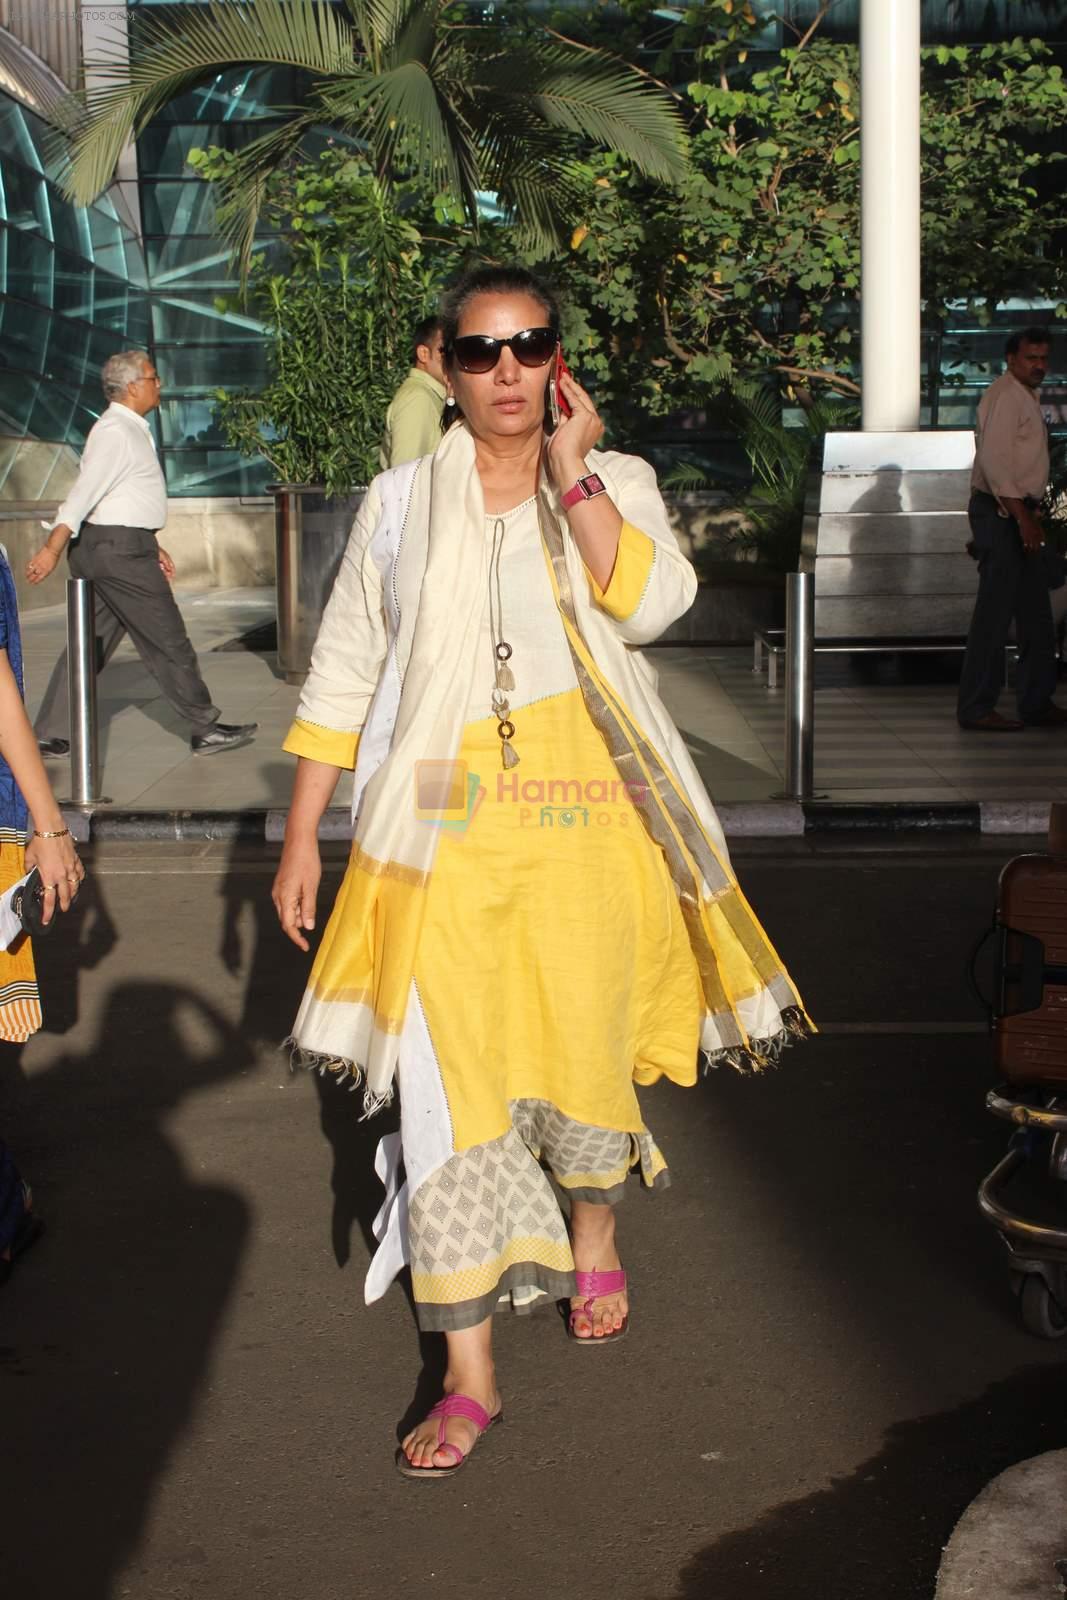 Shabana Azmi snapped at airport  on 10th June 2015